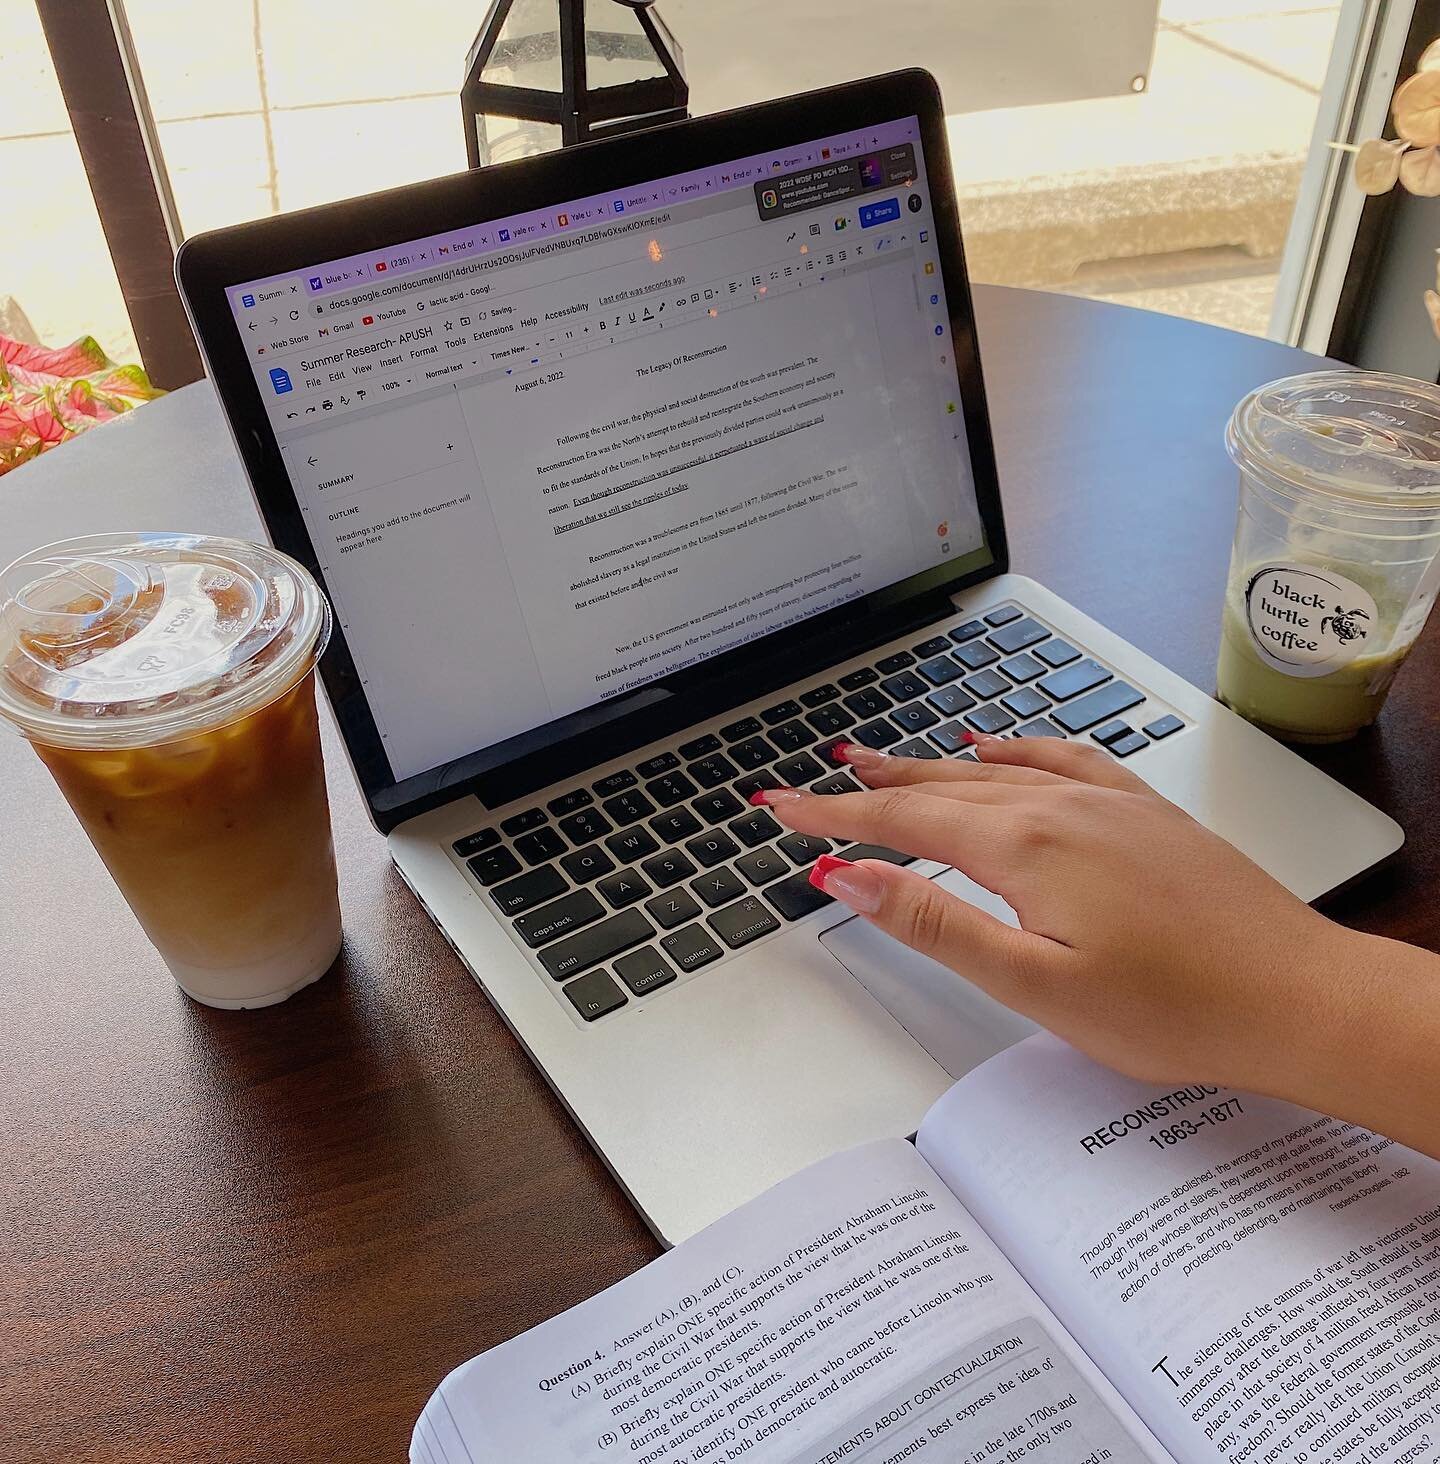 pov u and ur friend are having a study sesh at black turtle coffee ✨☕️ #coffeeshop #studygram